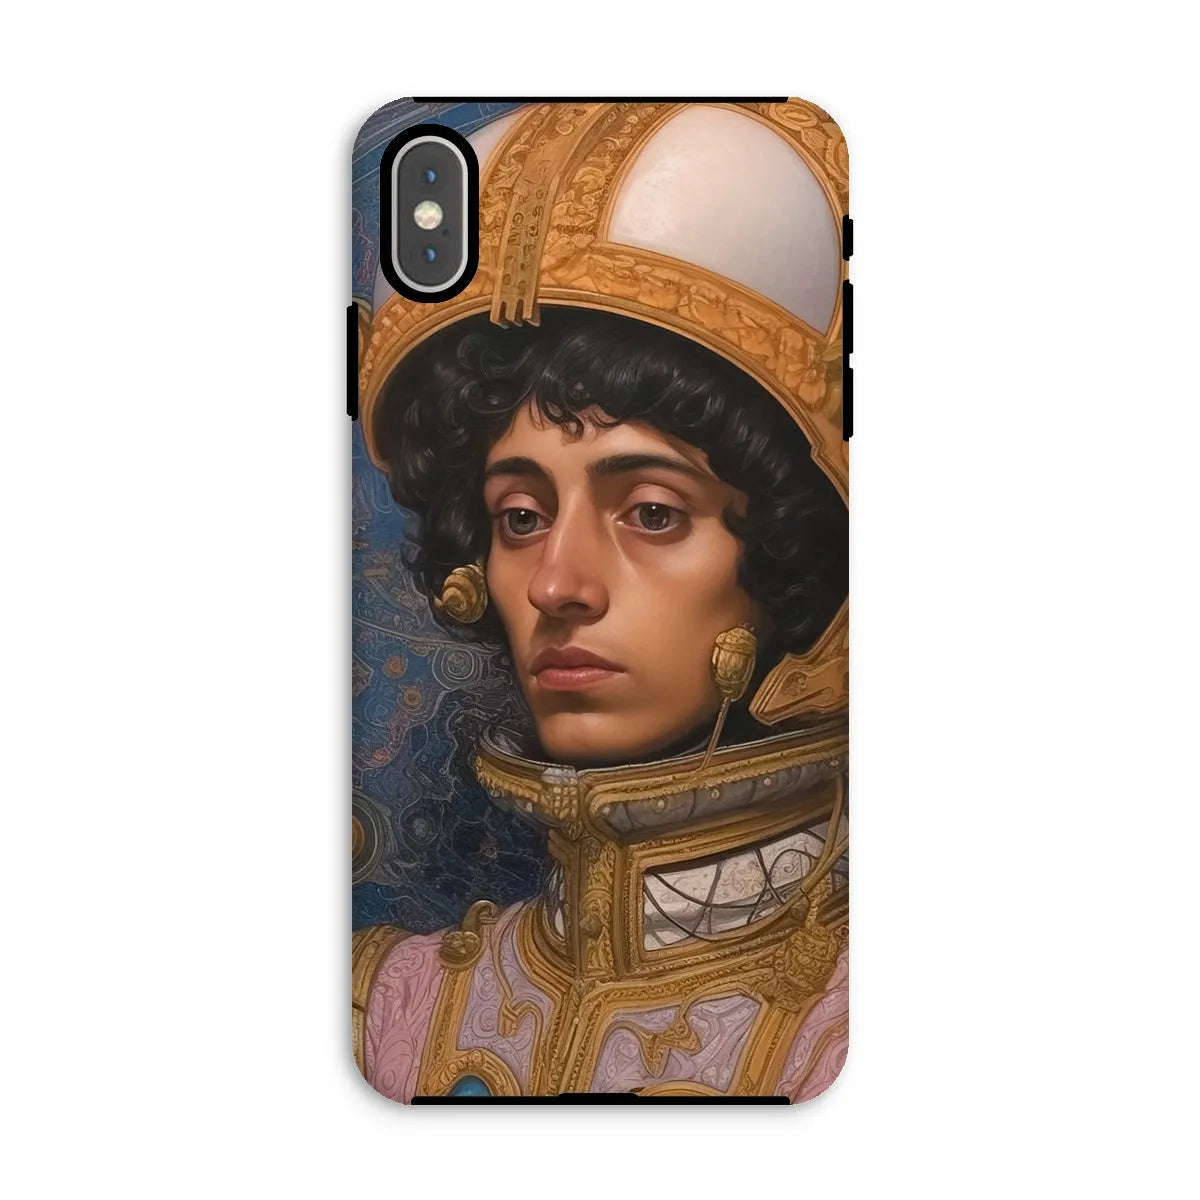 Samir The Gay Astronaut - Lgbtq Art Phone Case - Iphone Xs Max / Matte - Mobile Phone Cases - Aesthetic Art